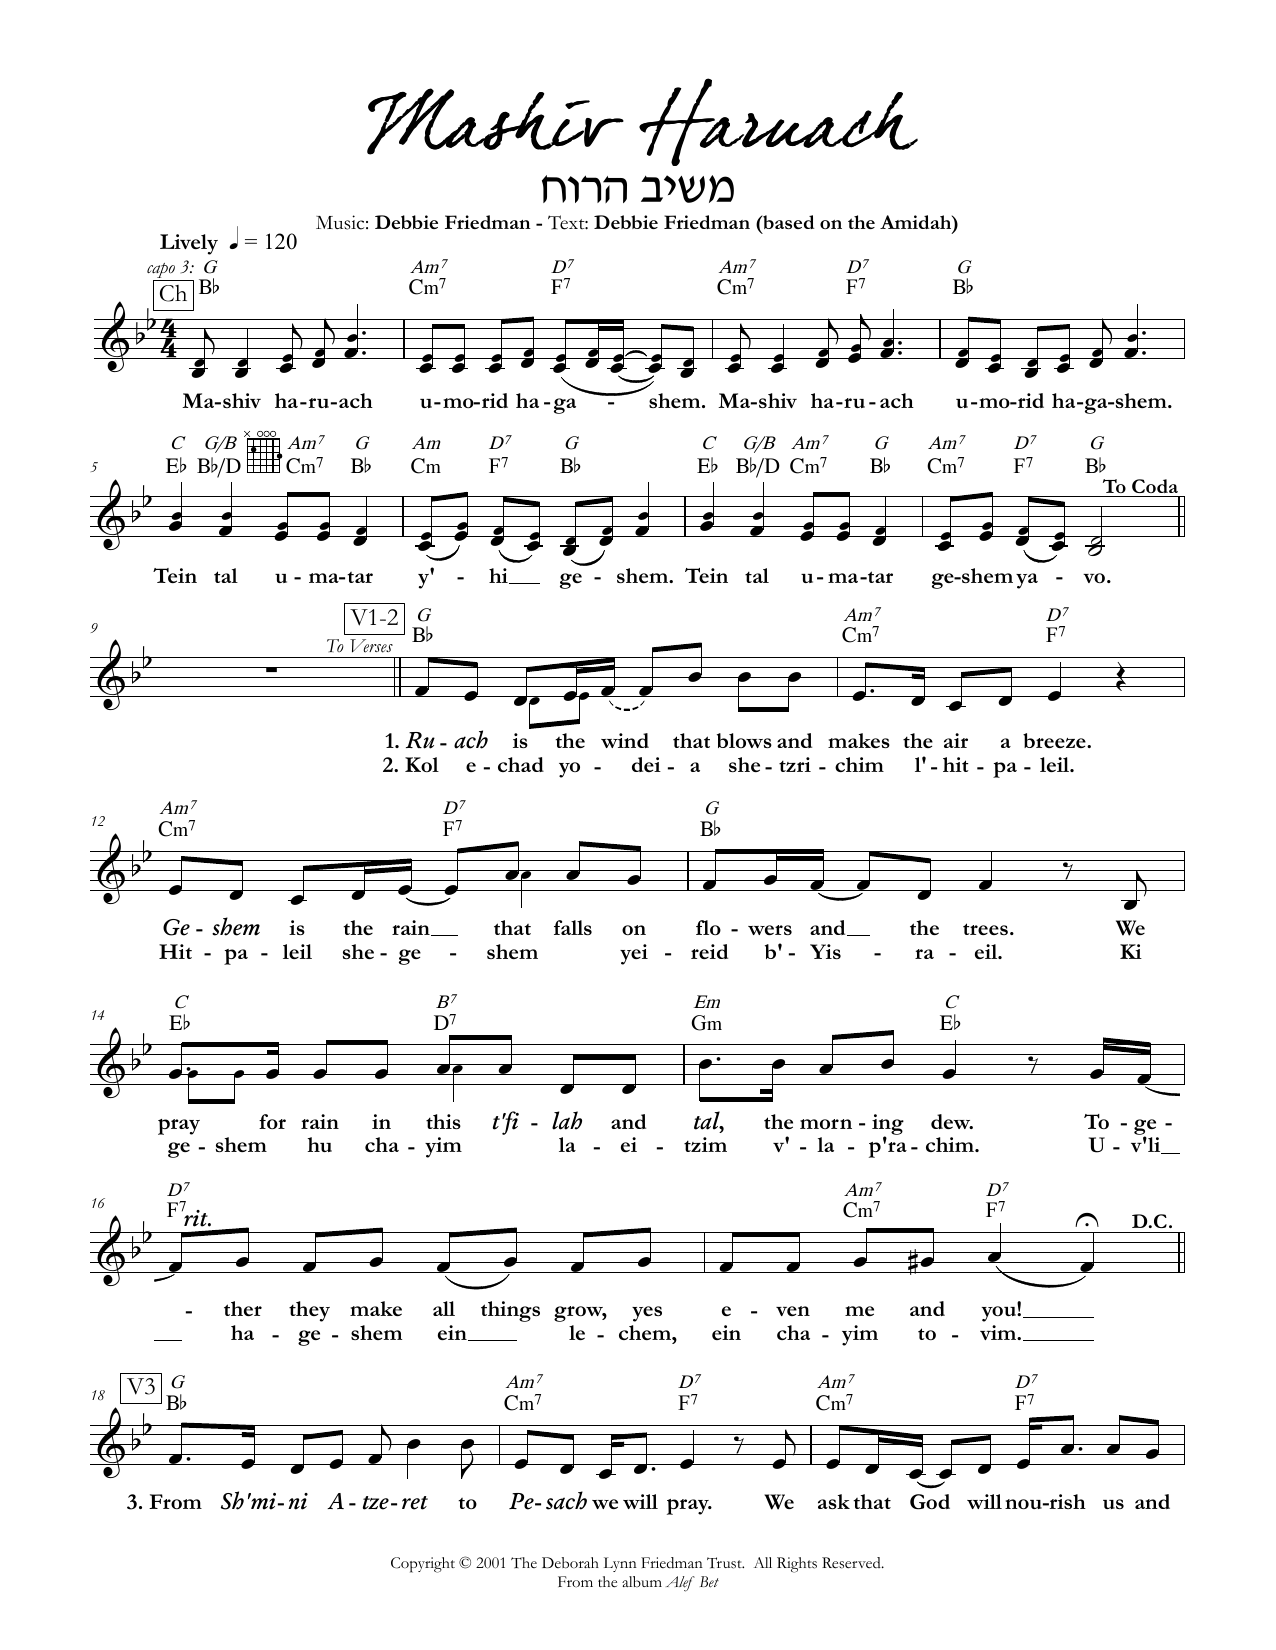 Debbie Friedman Mashiv Haruach Sheet Music Notes & Chords for Lead Sheet / Fake Book - Download or Print PDF